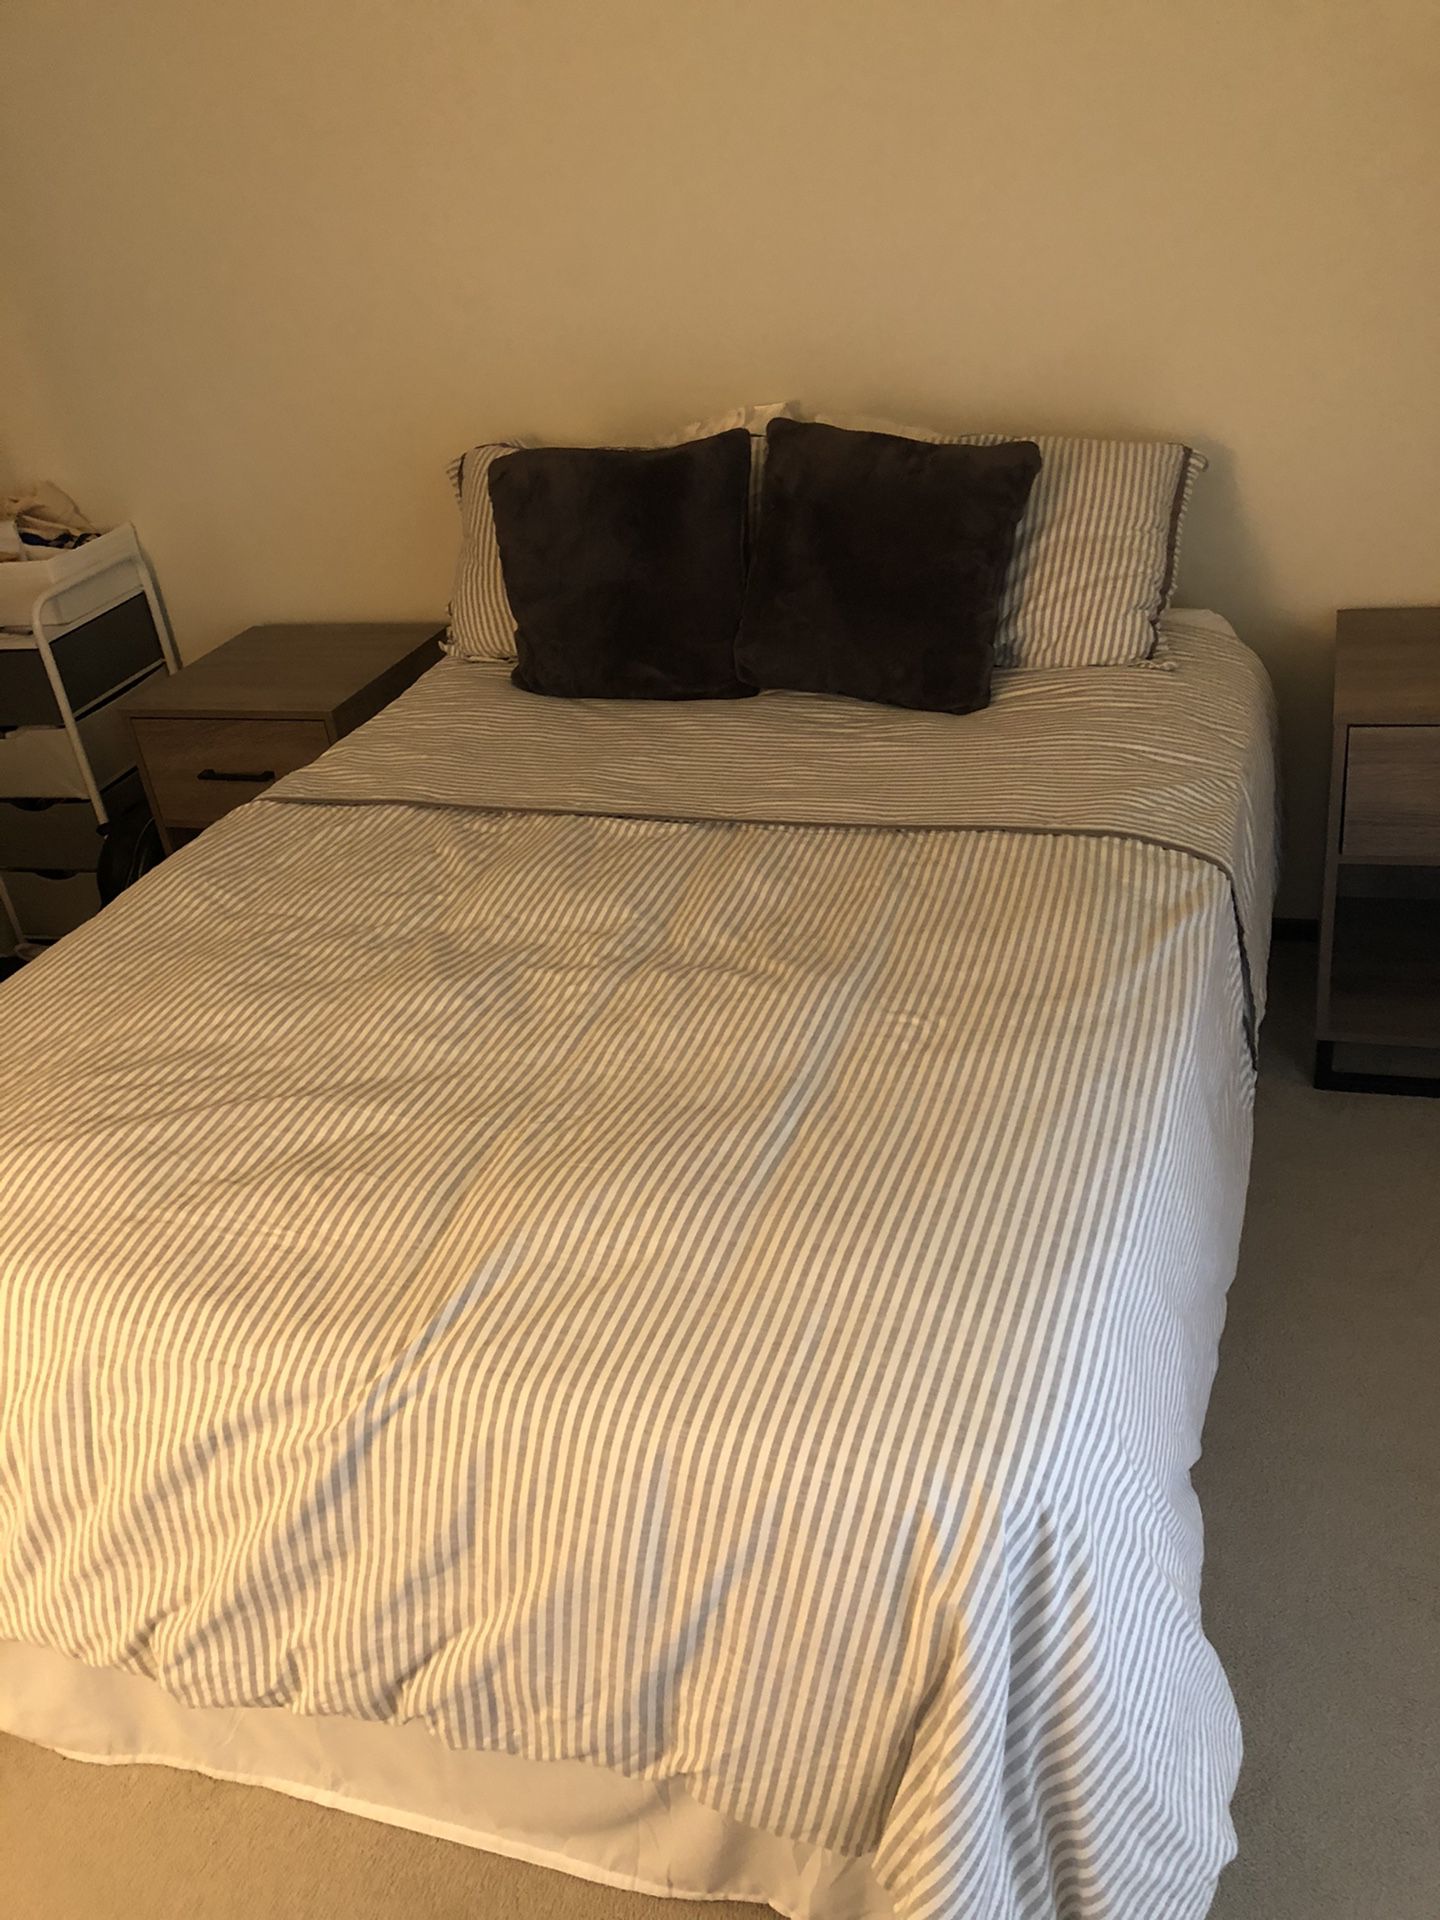 Full size bed (mattress, box spring & frame)